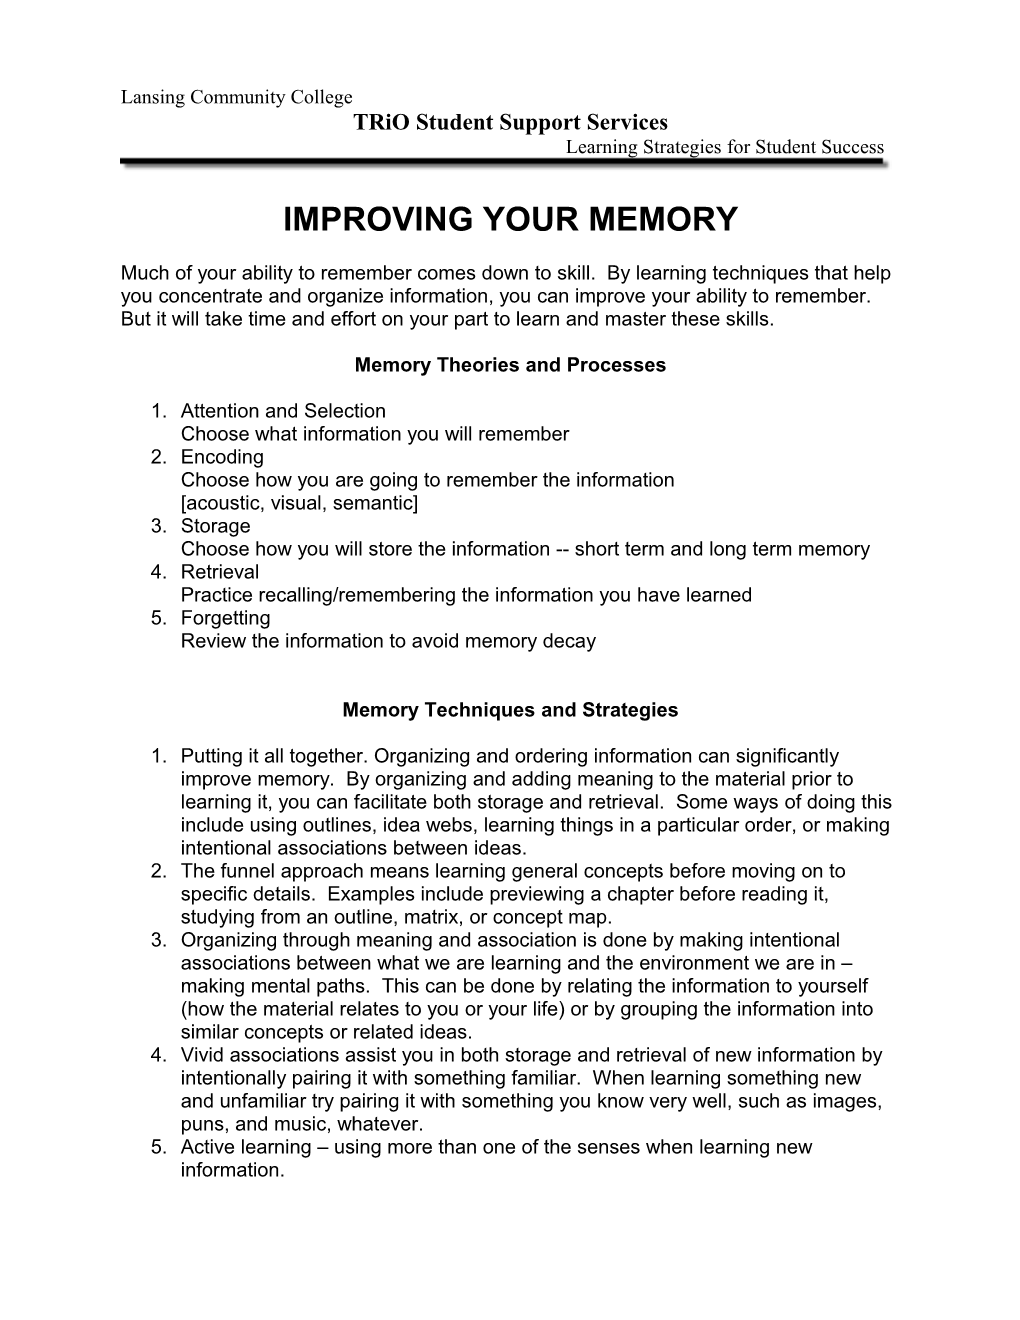 Study Skills - Improve Memory - Trio Student Support Services